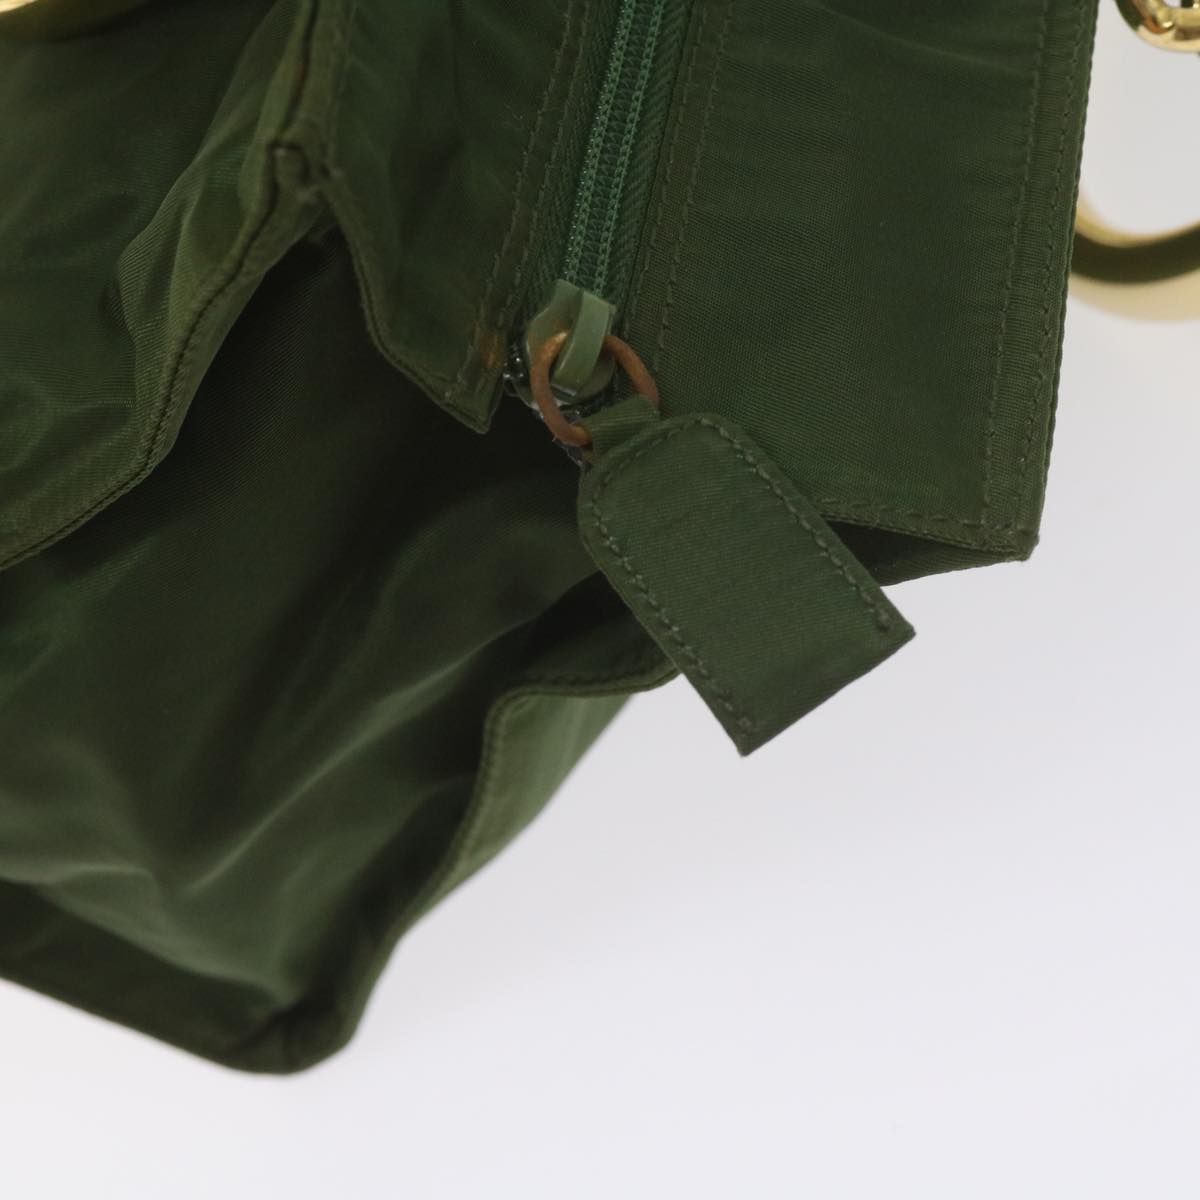 PRADA Hand Bag Nylon Green Auth 61003